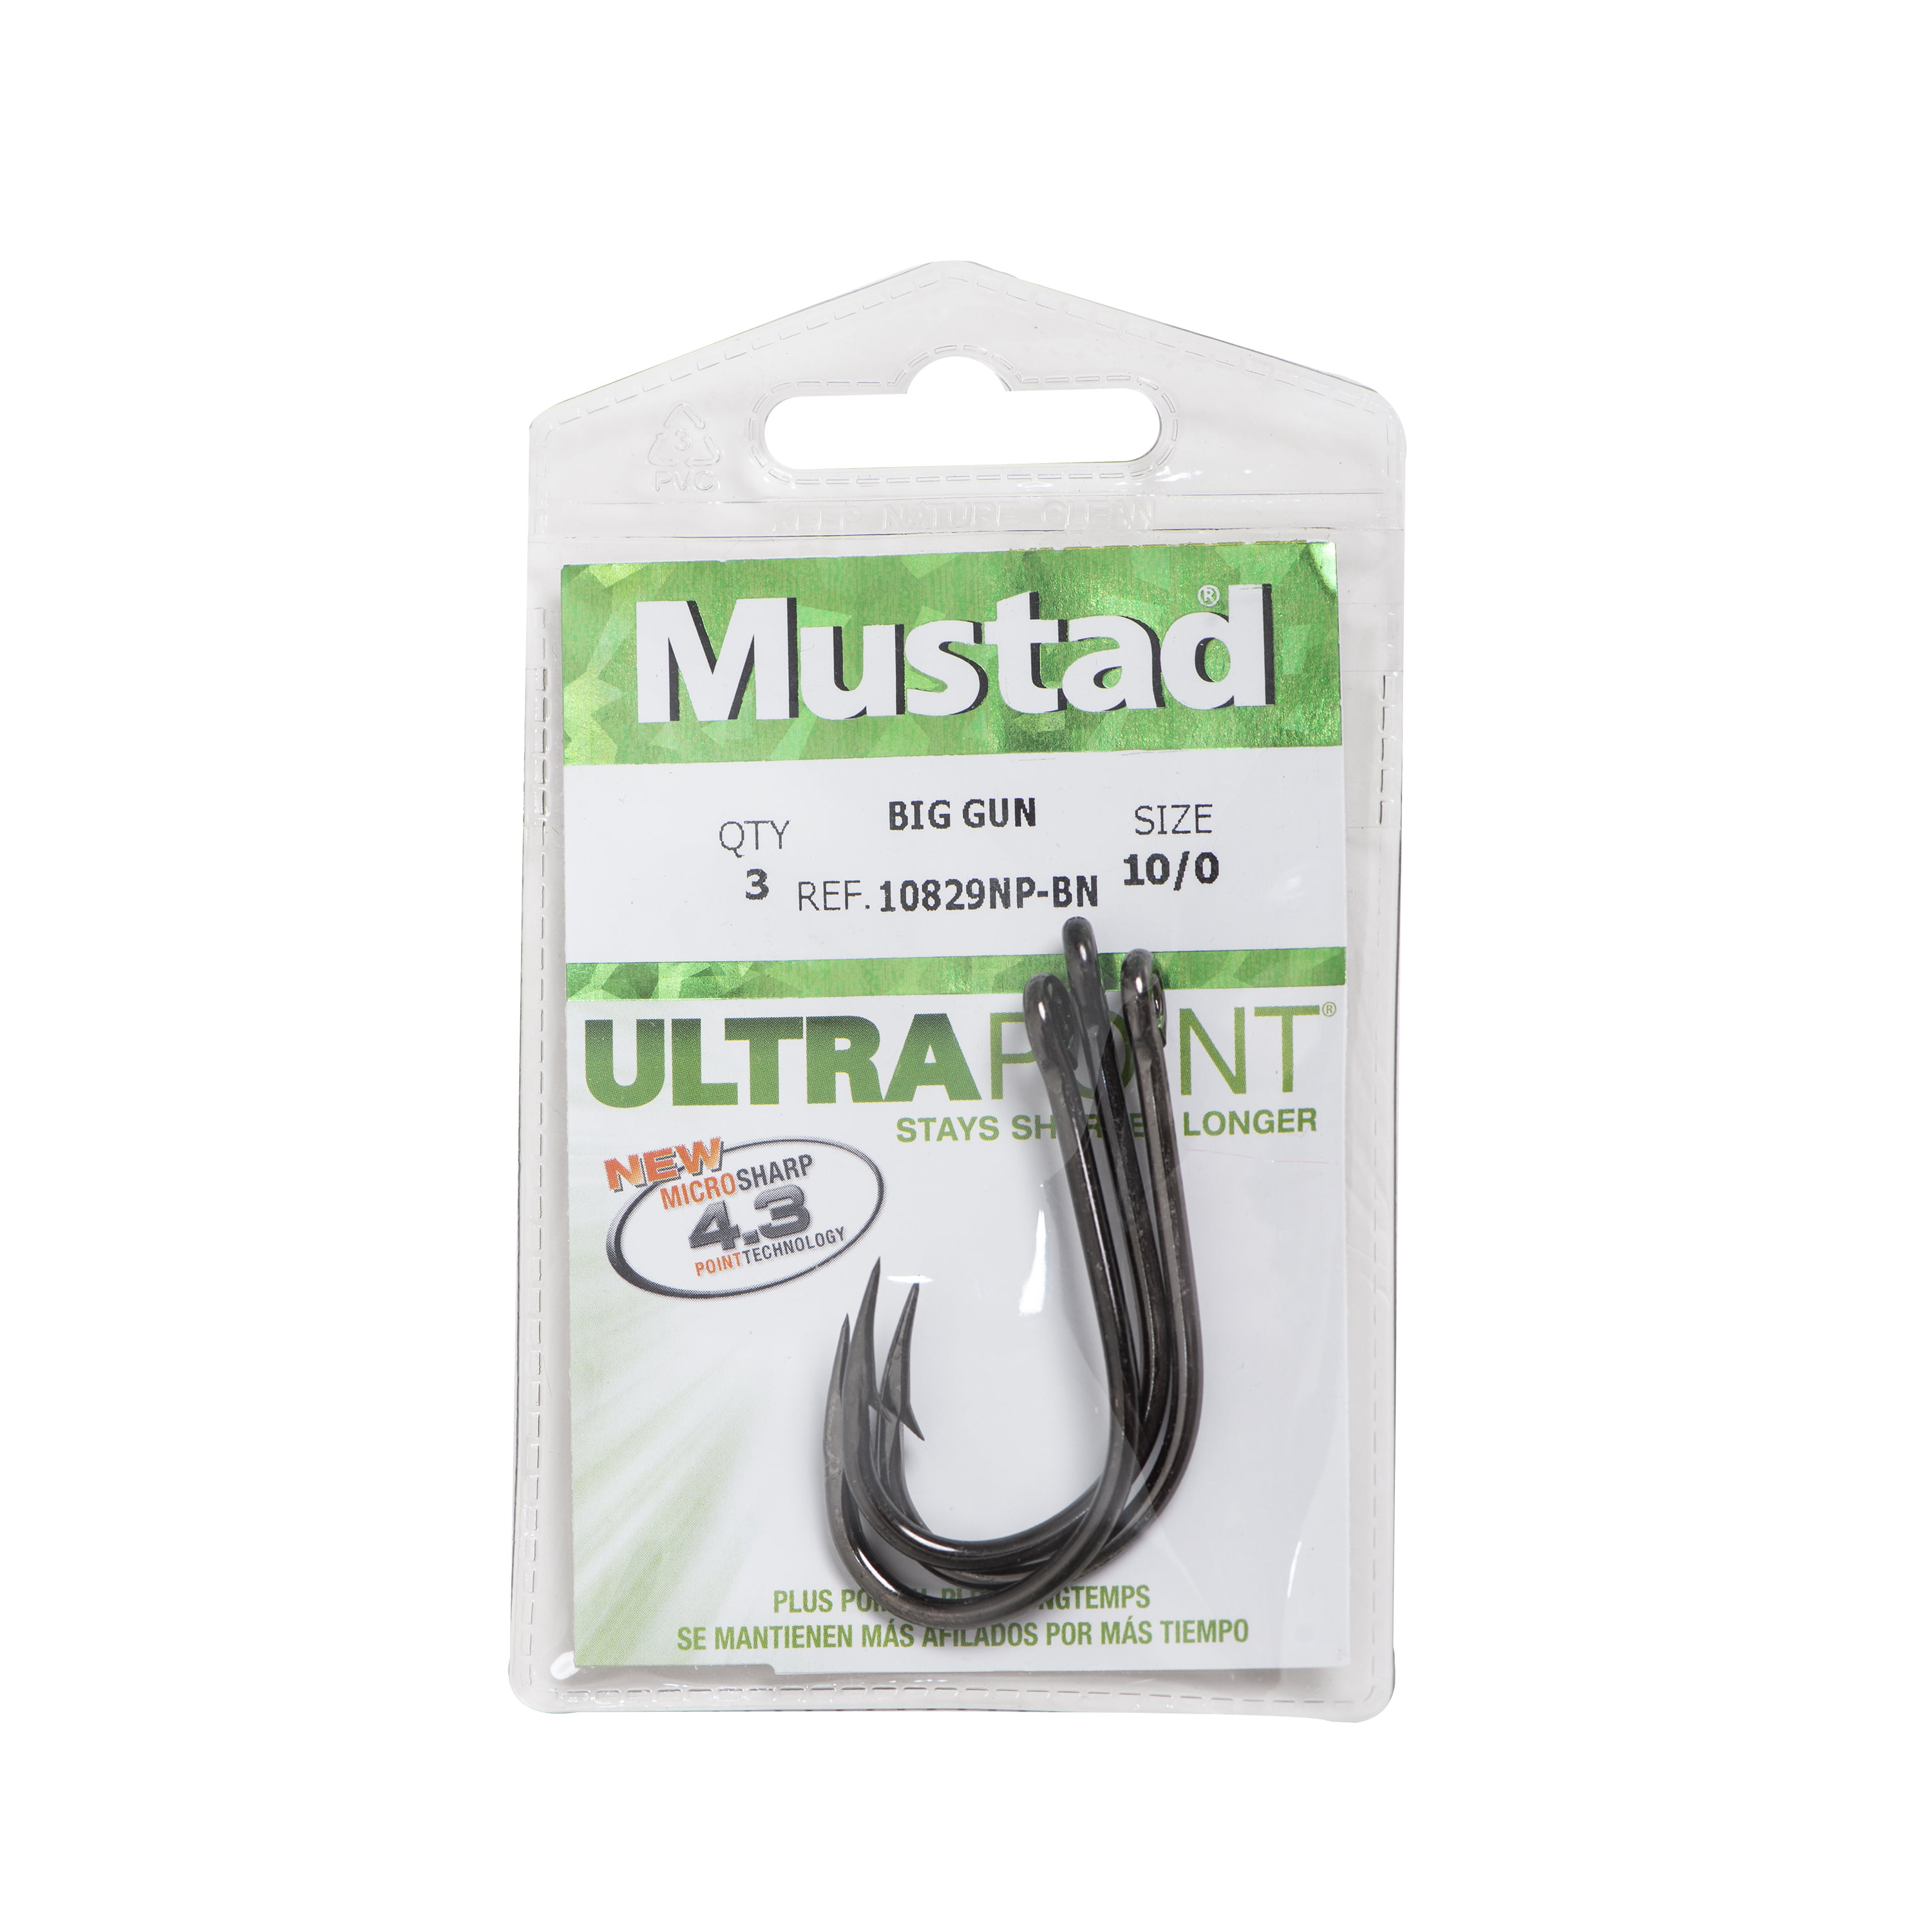 Mustad Ultra point Big Gun Hook - Size: 9/0 (Black Nickel) 6pc 